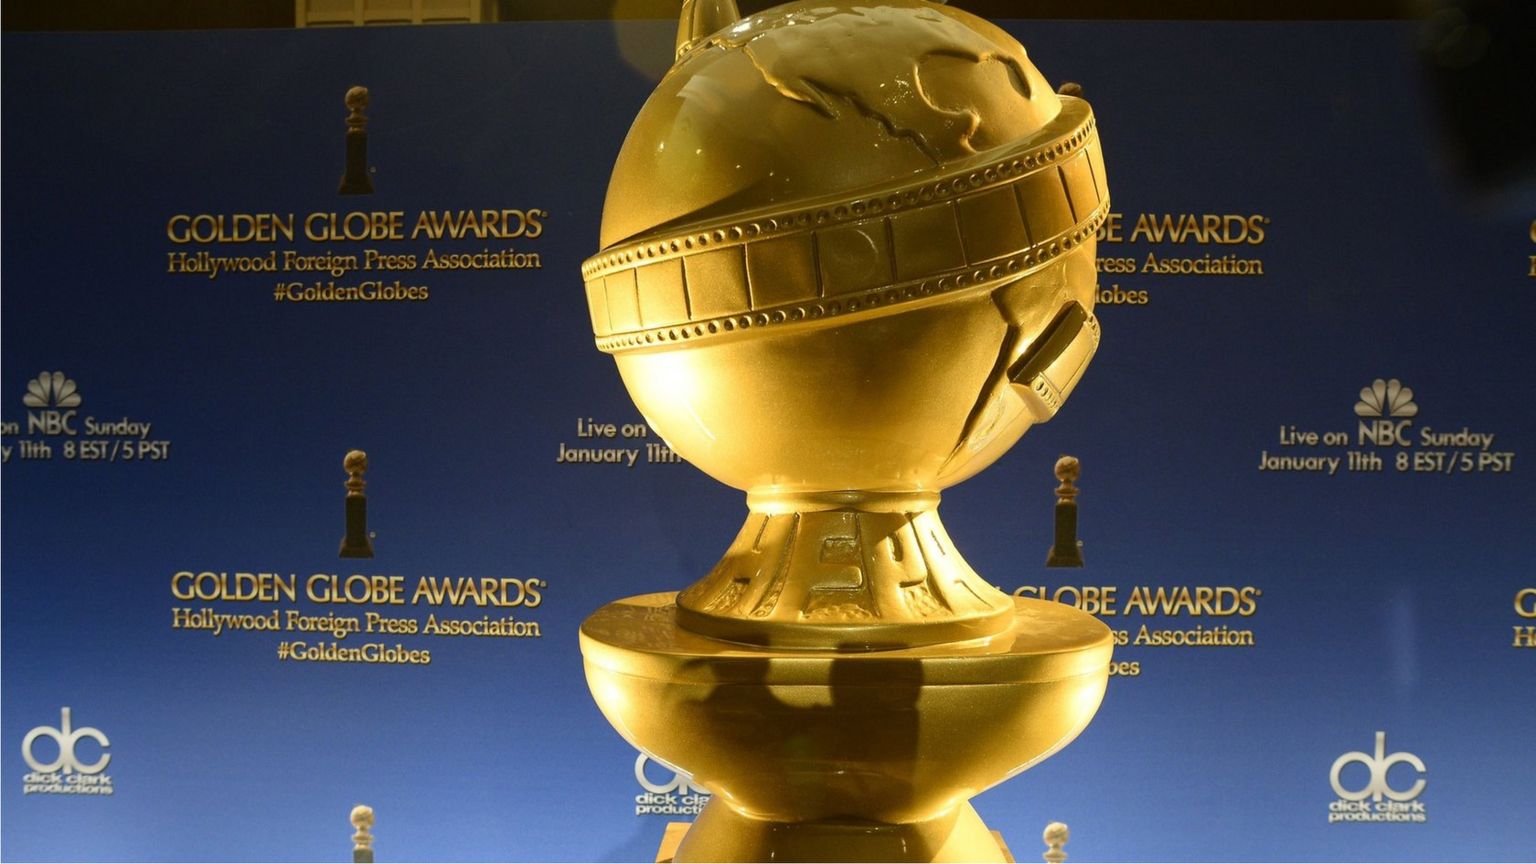 Golden Globes 2016: The Revenant wins top three awards - BBC News